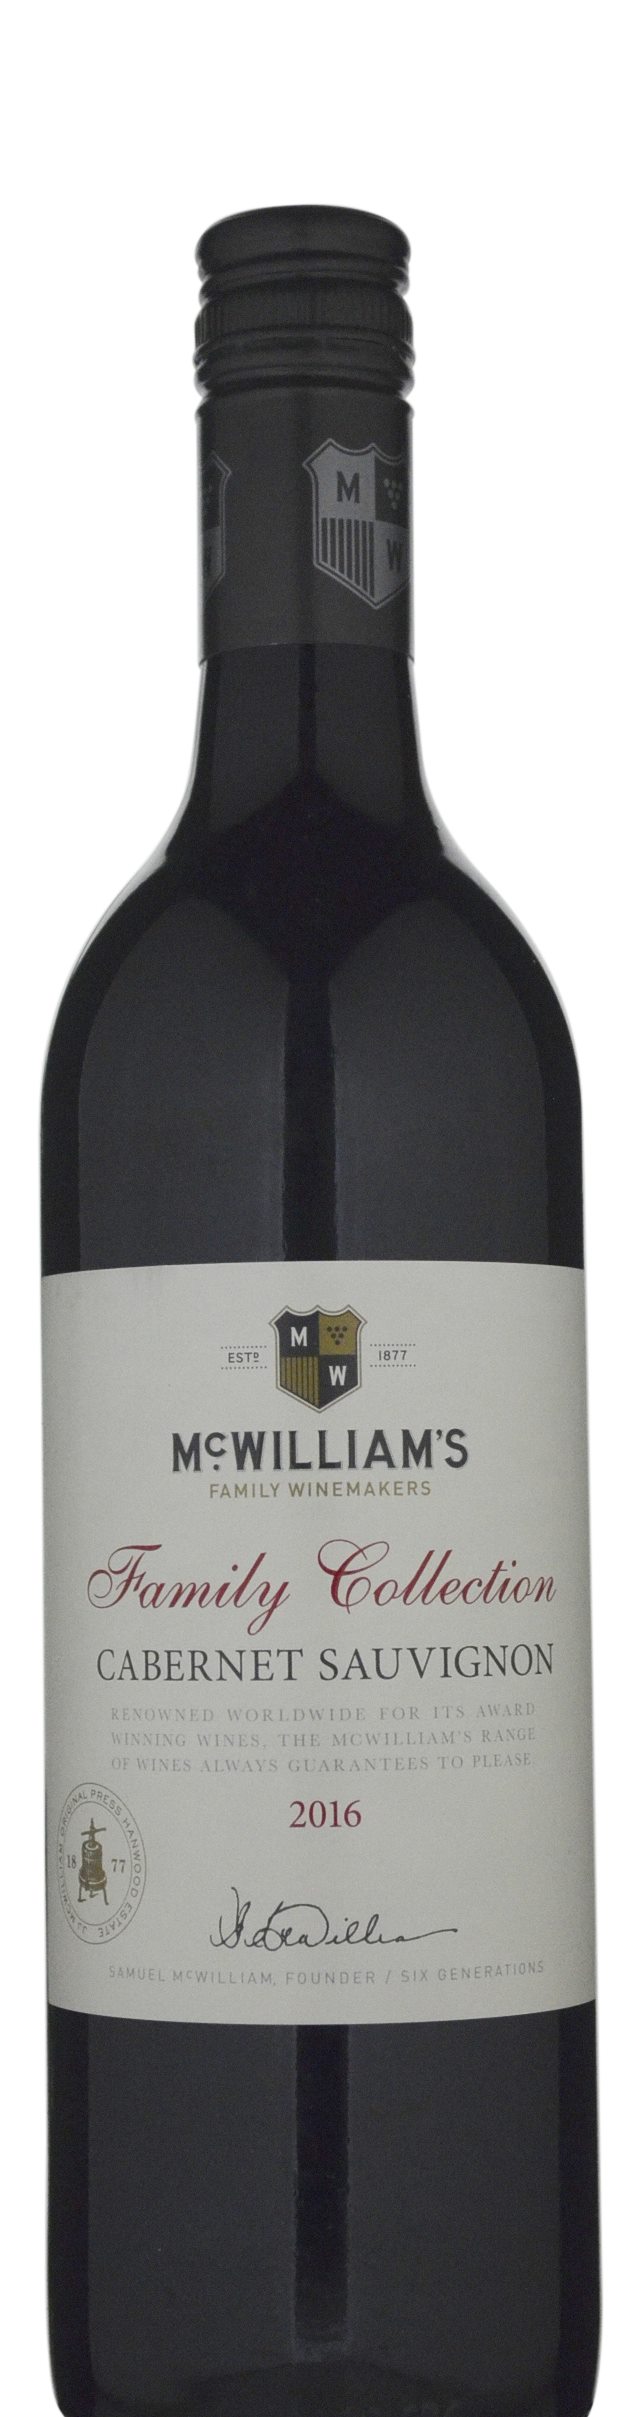 McWilliams Family Collection Cabernet Sauvignon 2016